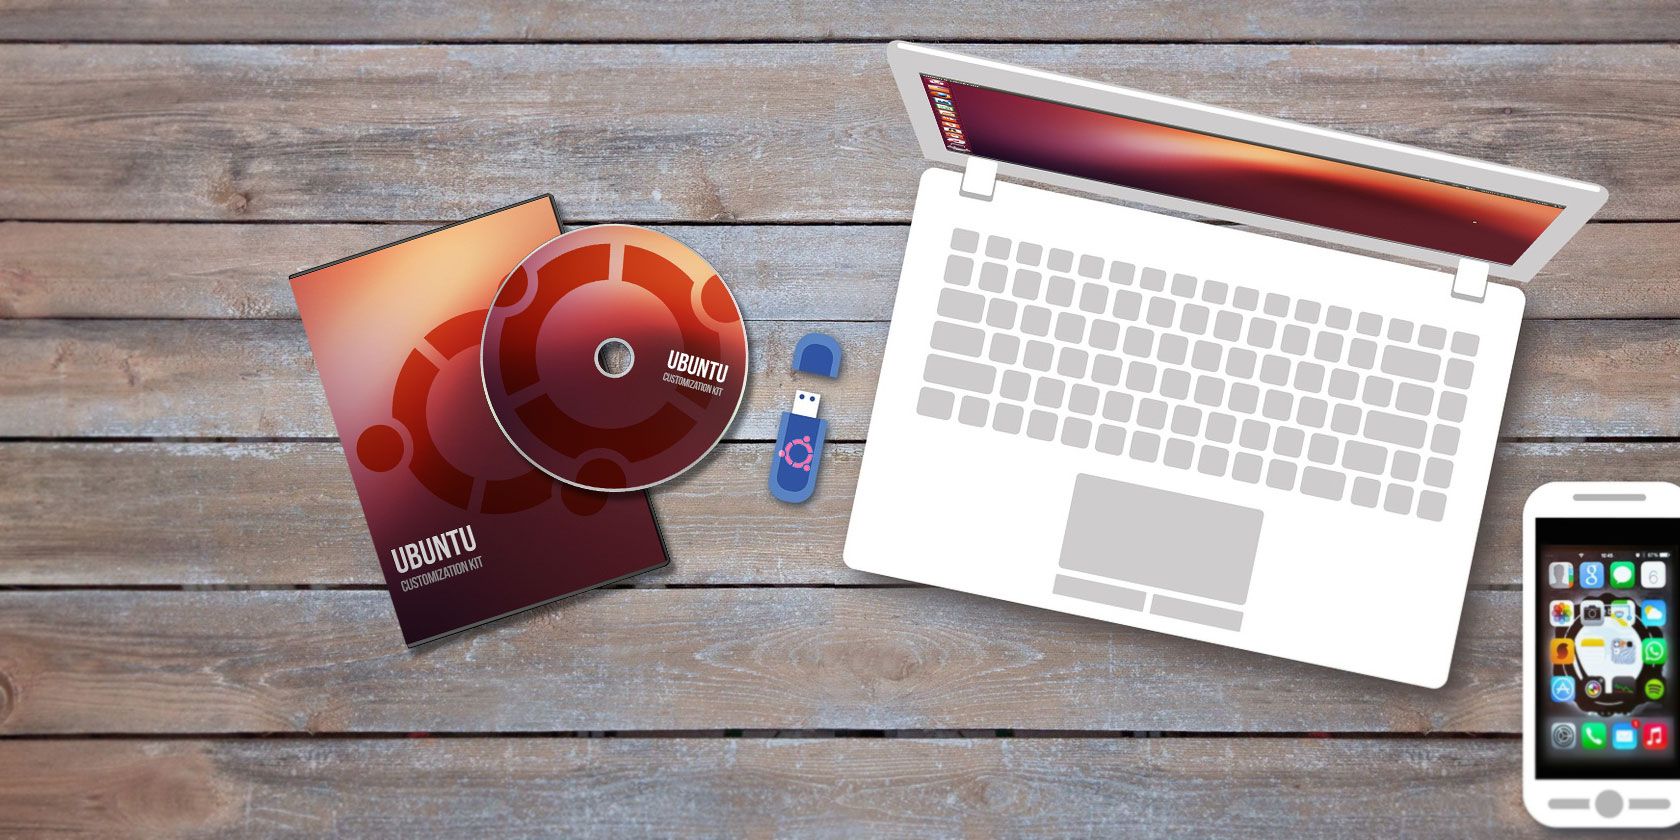 ubuntu-customization-kit